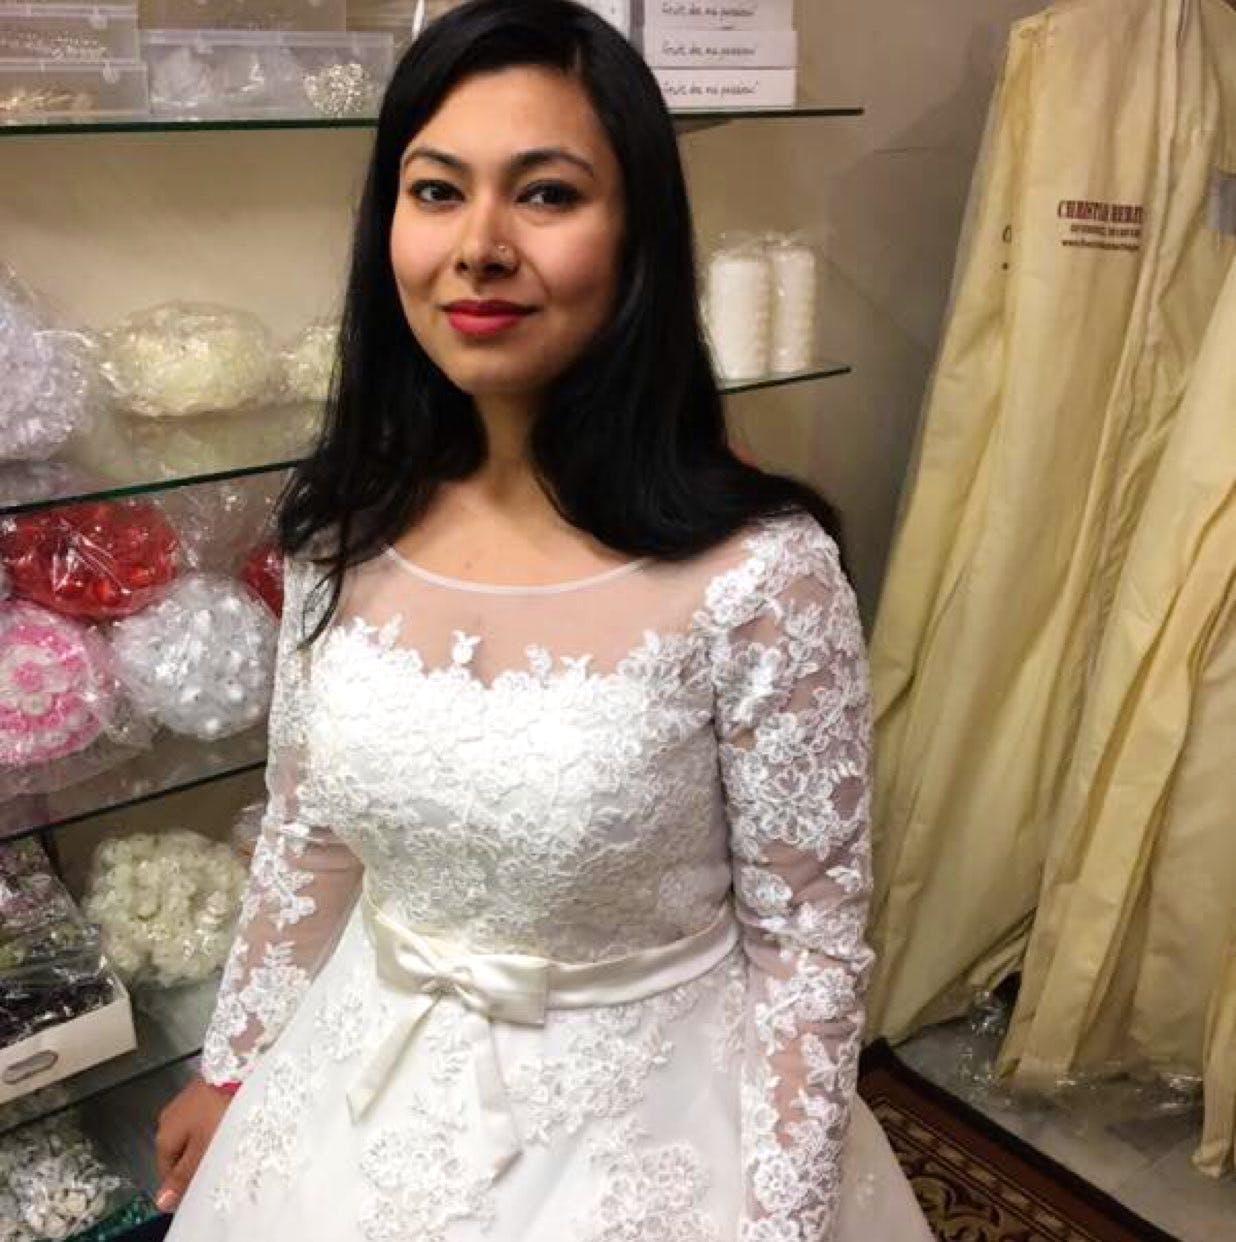 White Bridal Gown Deep V-Neck Custom Lace Mermaid Wedding Dresses 2020 Long  Sleeve bride dress платье свадебное vestido de noiva - Camellia Vines